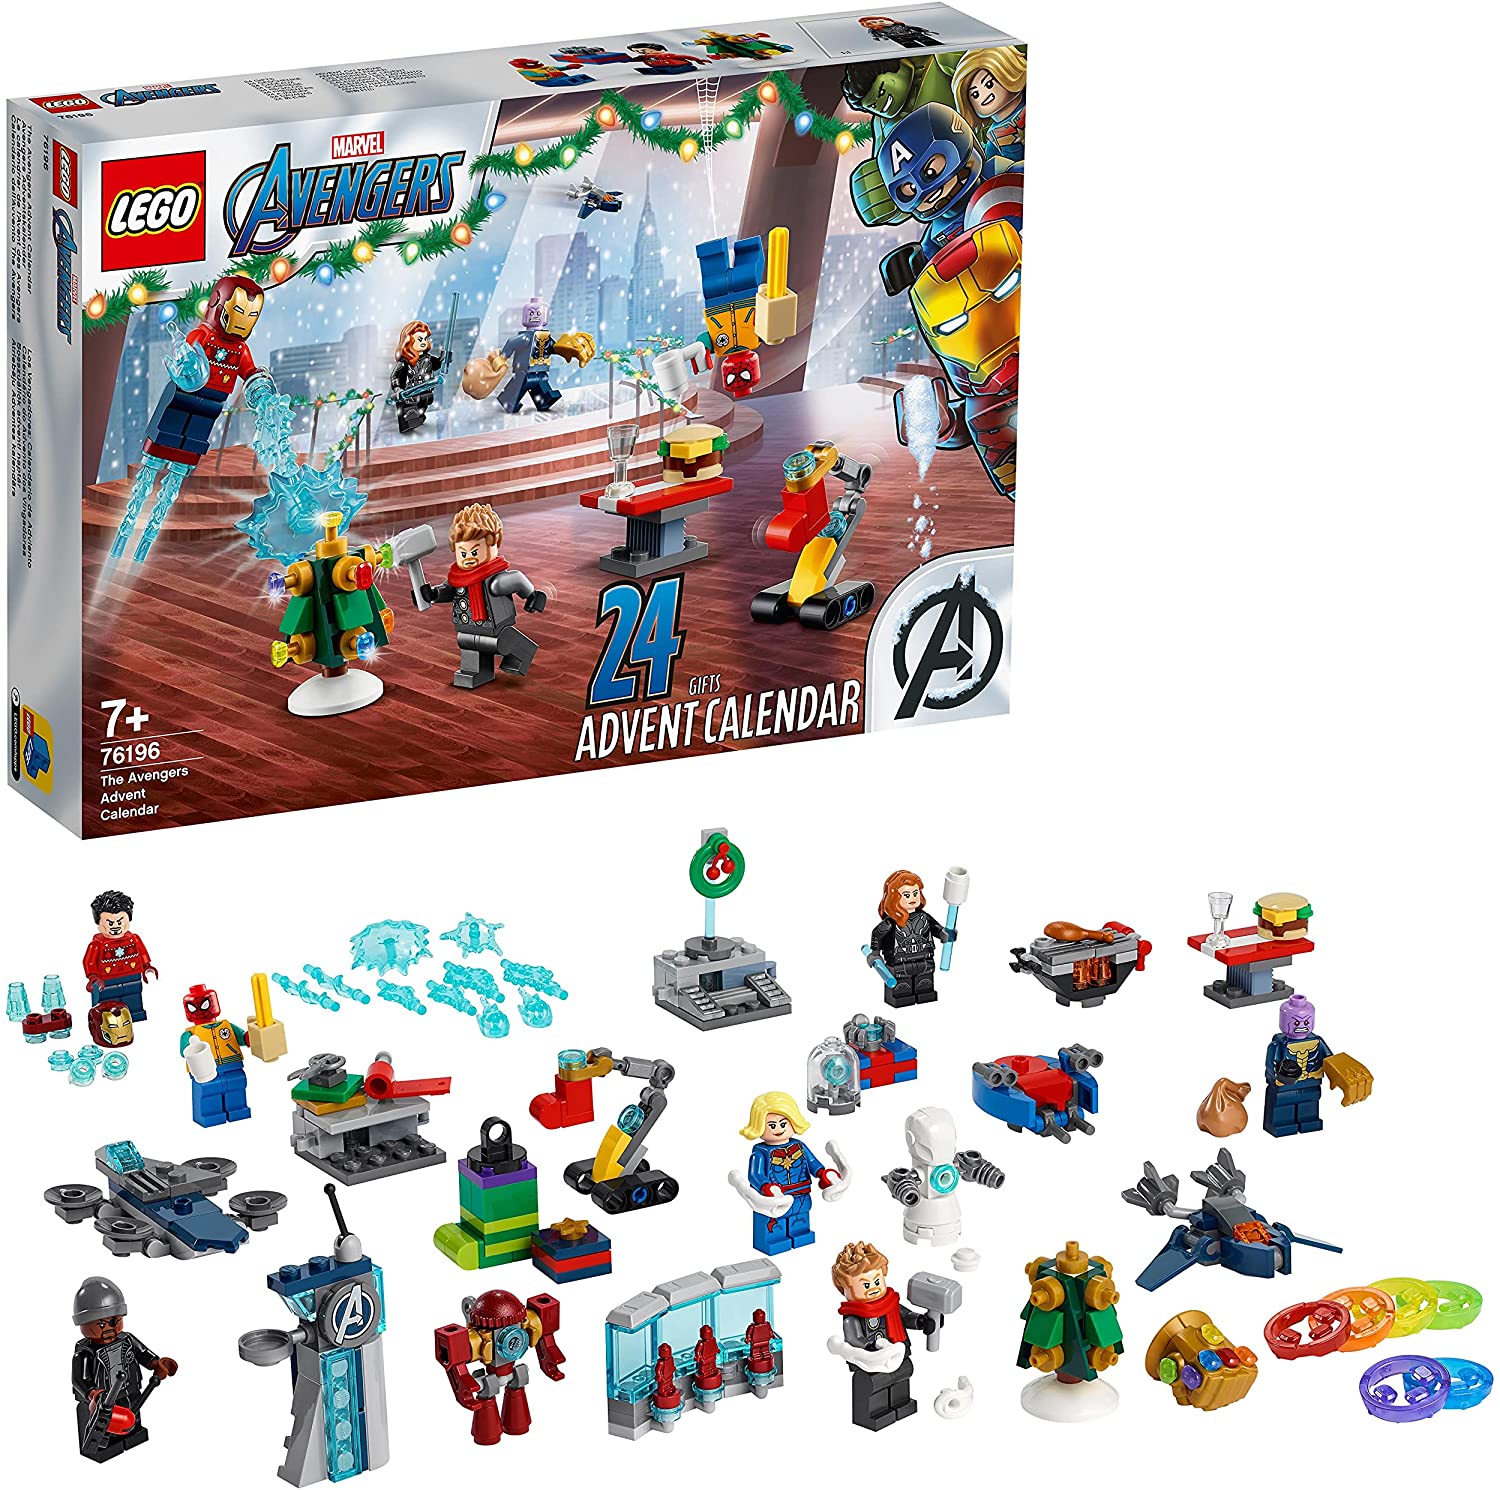 Lego Avengers Advent Calendar 2021 Toys Hobbies